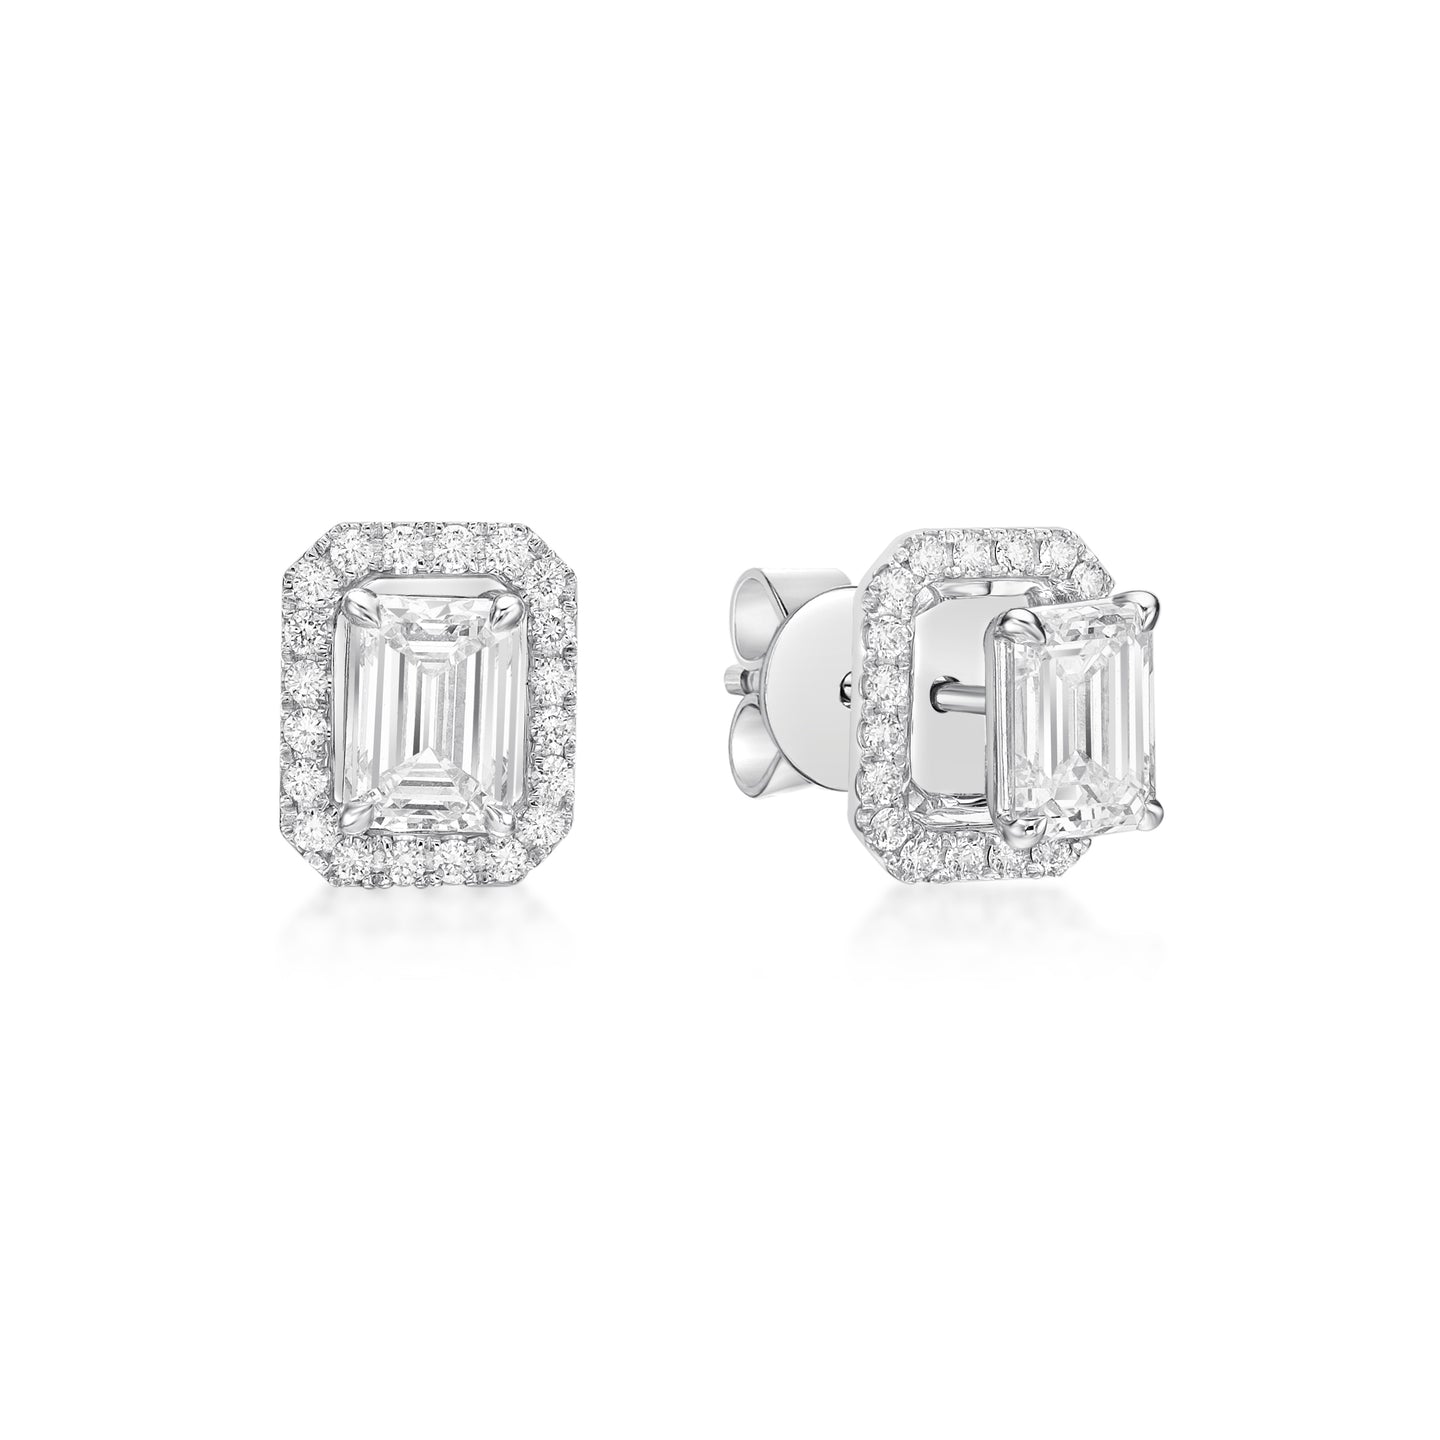 Emerald Cut Diamonds Earrings with Detachable Diamond Halo Jackets